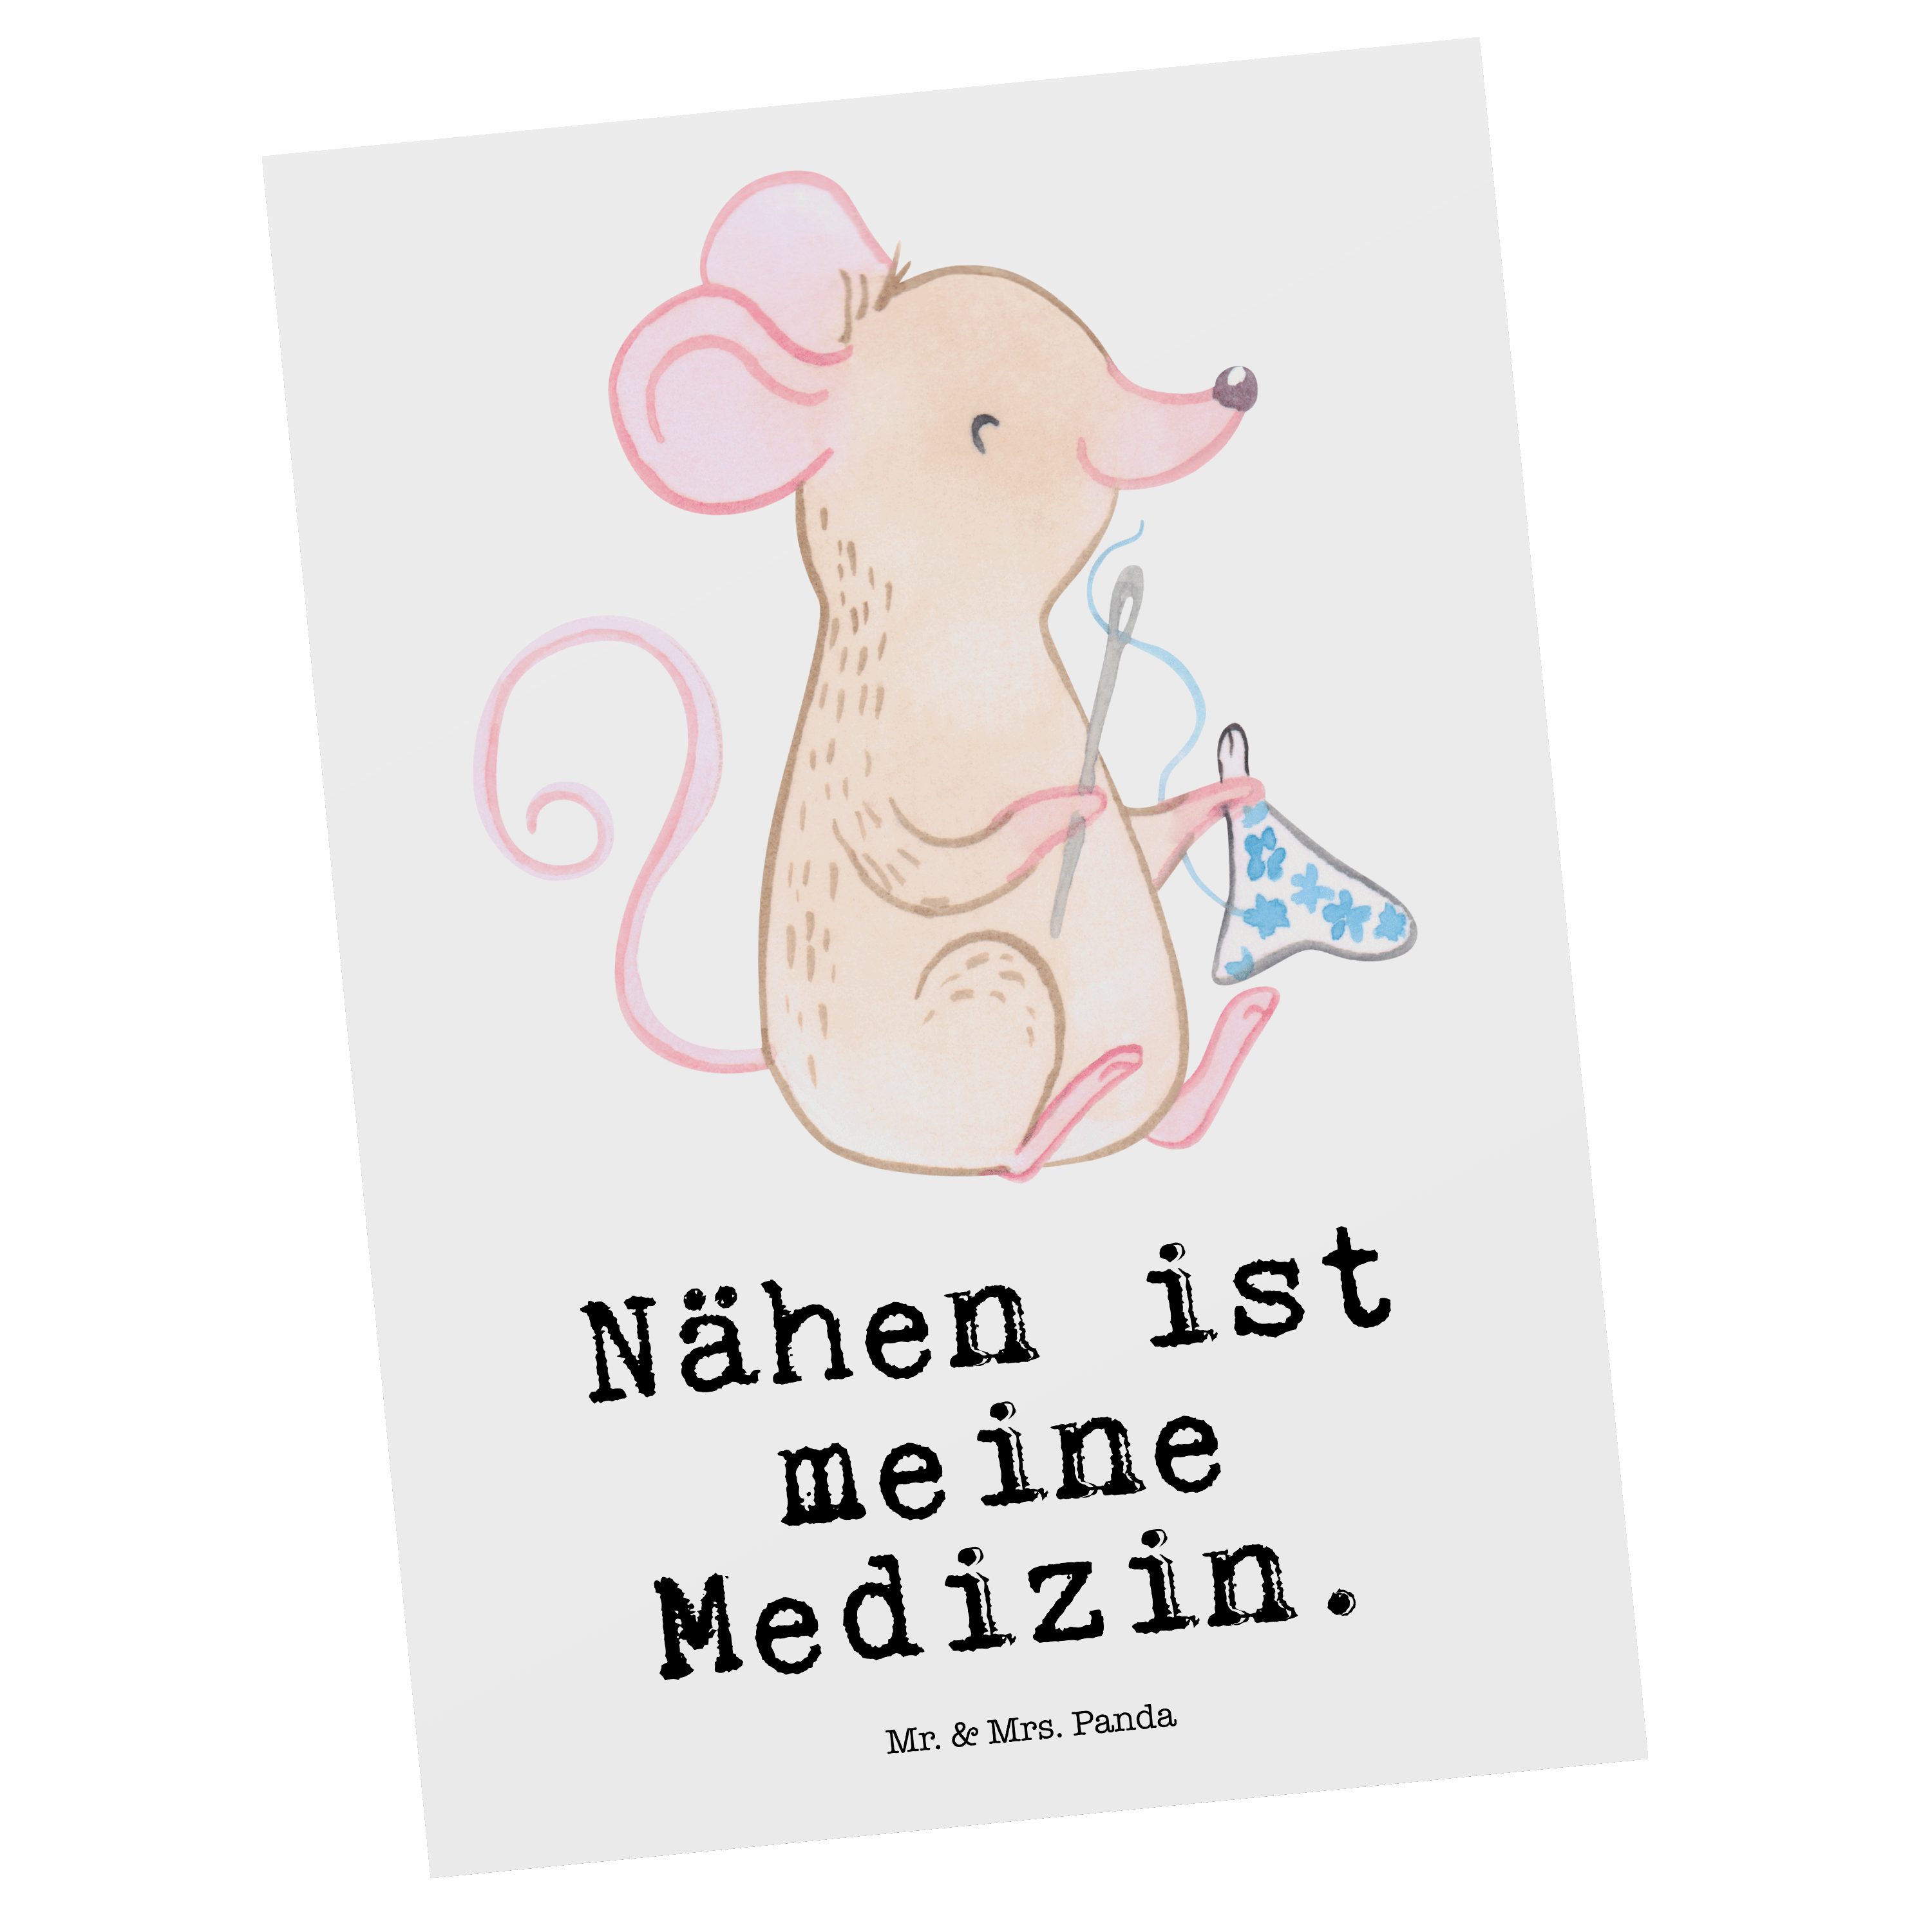 Mr. & Mrs. Panda Postkarte Maus Nähen Medizin - Weiß - Geschenk, Sport, DIY, Nähprojekte, Nähkur